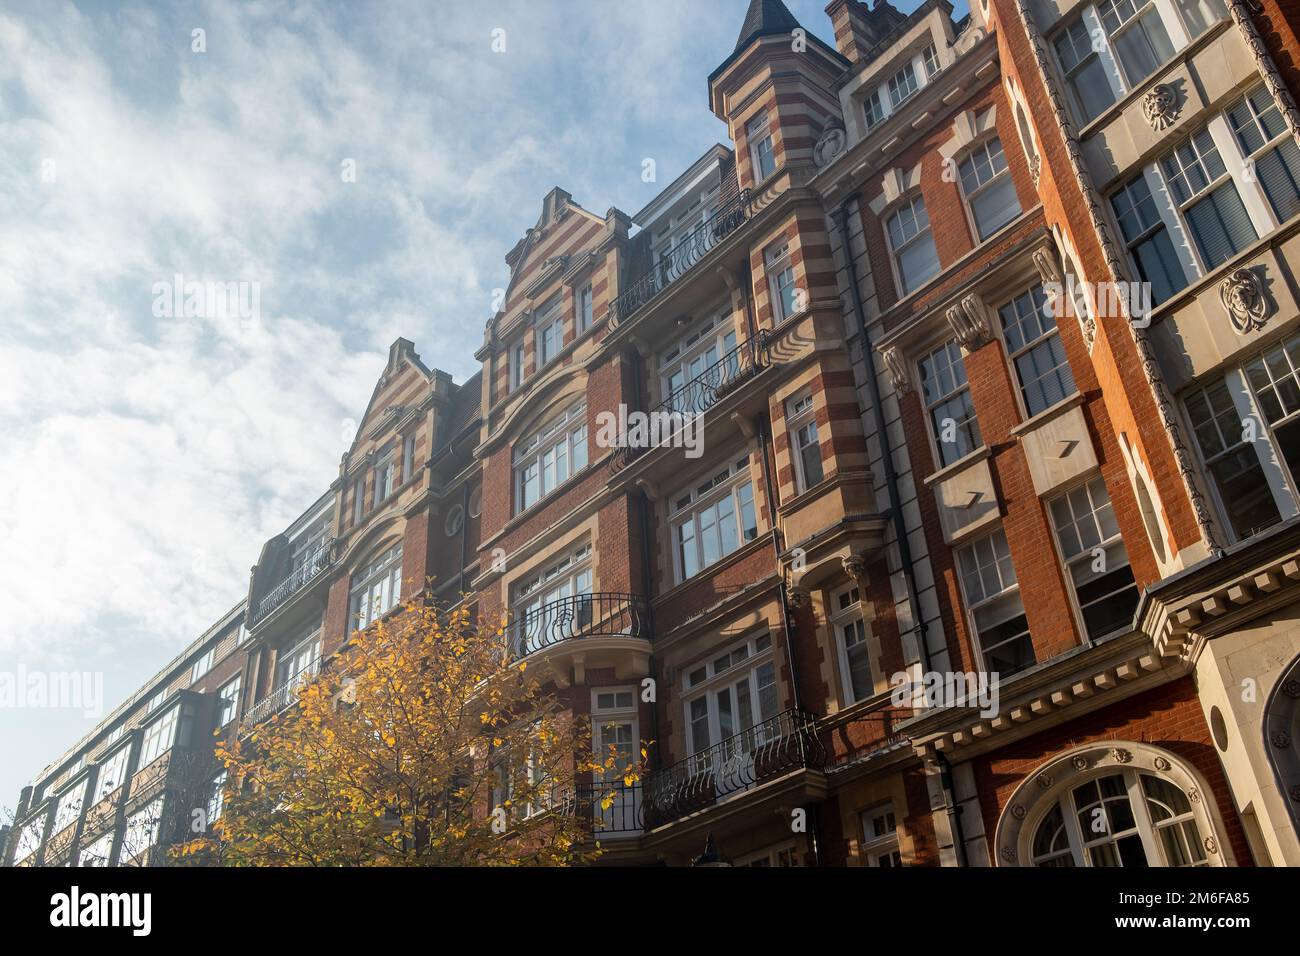 Knightsbridge, London- Upmarket luxury townhouses in Knightsbridge area of central West London Stock Photo